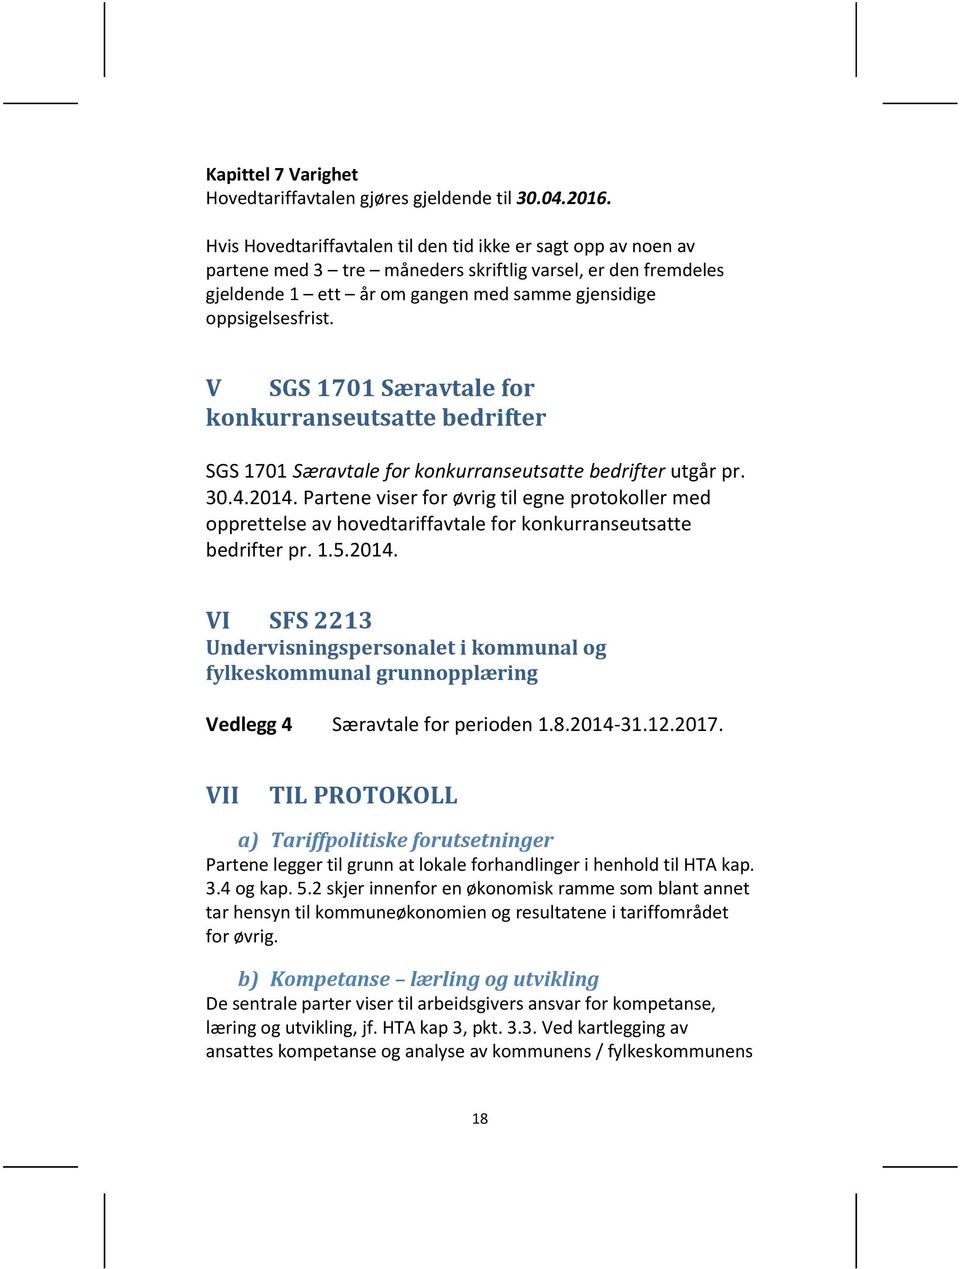 V SGS 1701 Særavtale for konkurranseutsatte bedrifter SGS 1701 Særavtale for konkurranseutsatte bedrifter utgår pr. 30.4.2014.